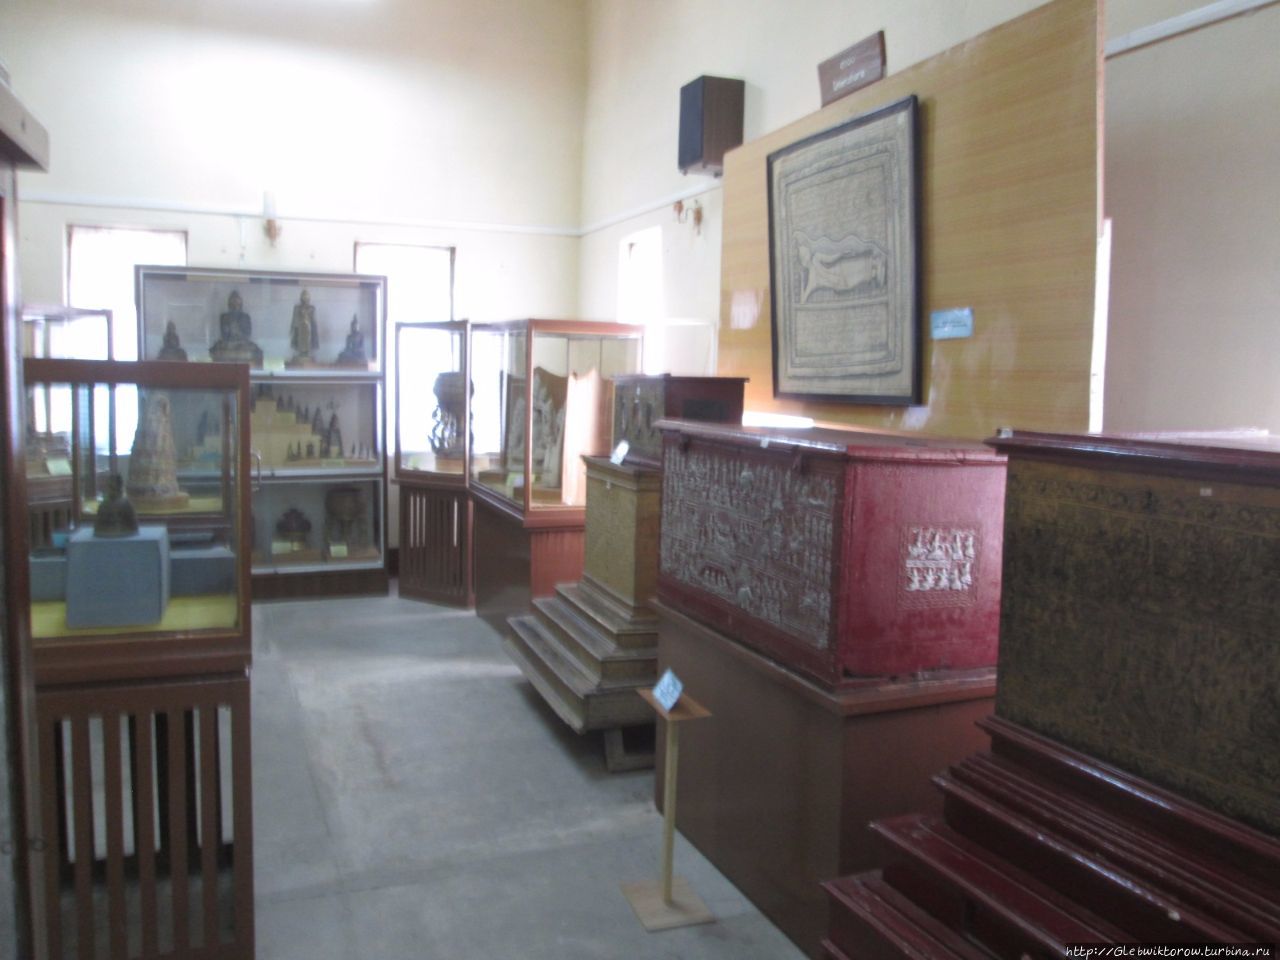 Музей культуры региона Эйявади Патейн, Мьянма